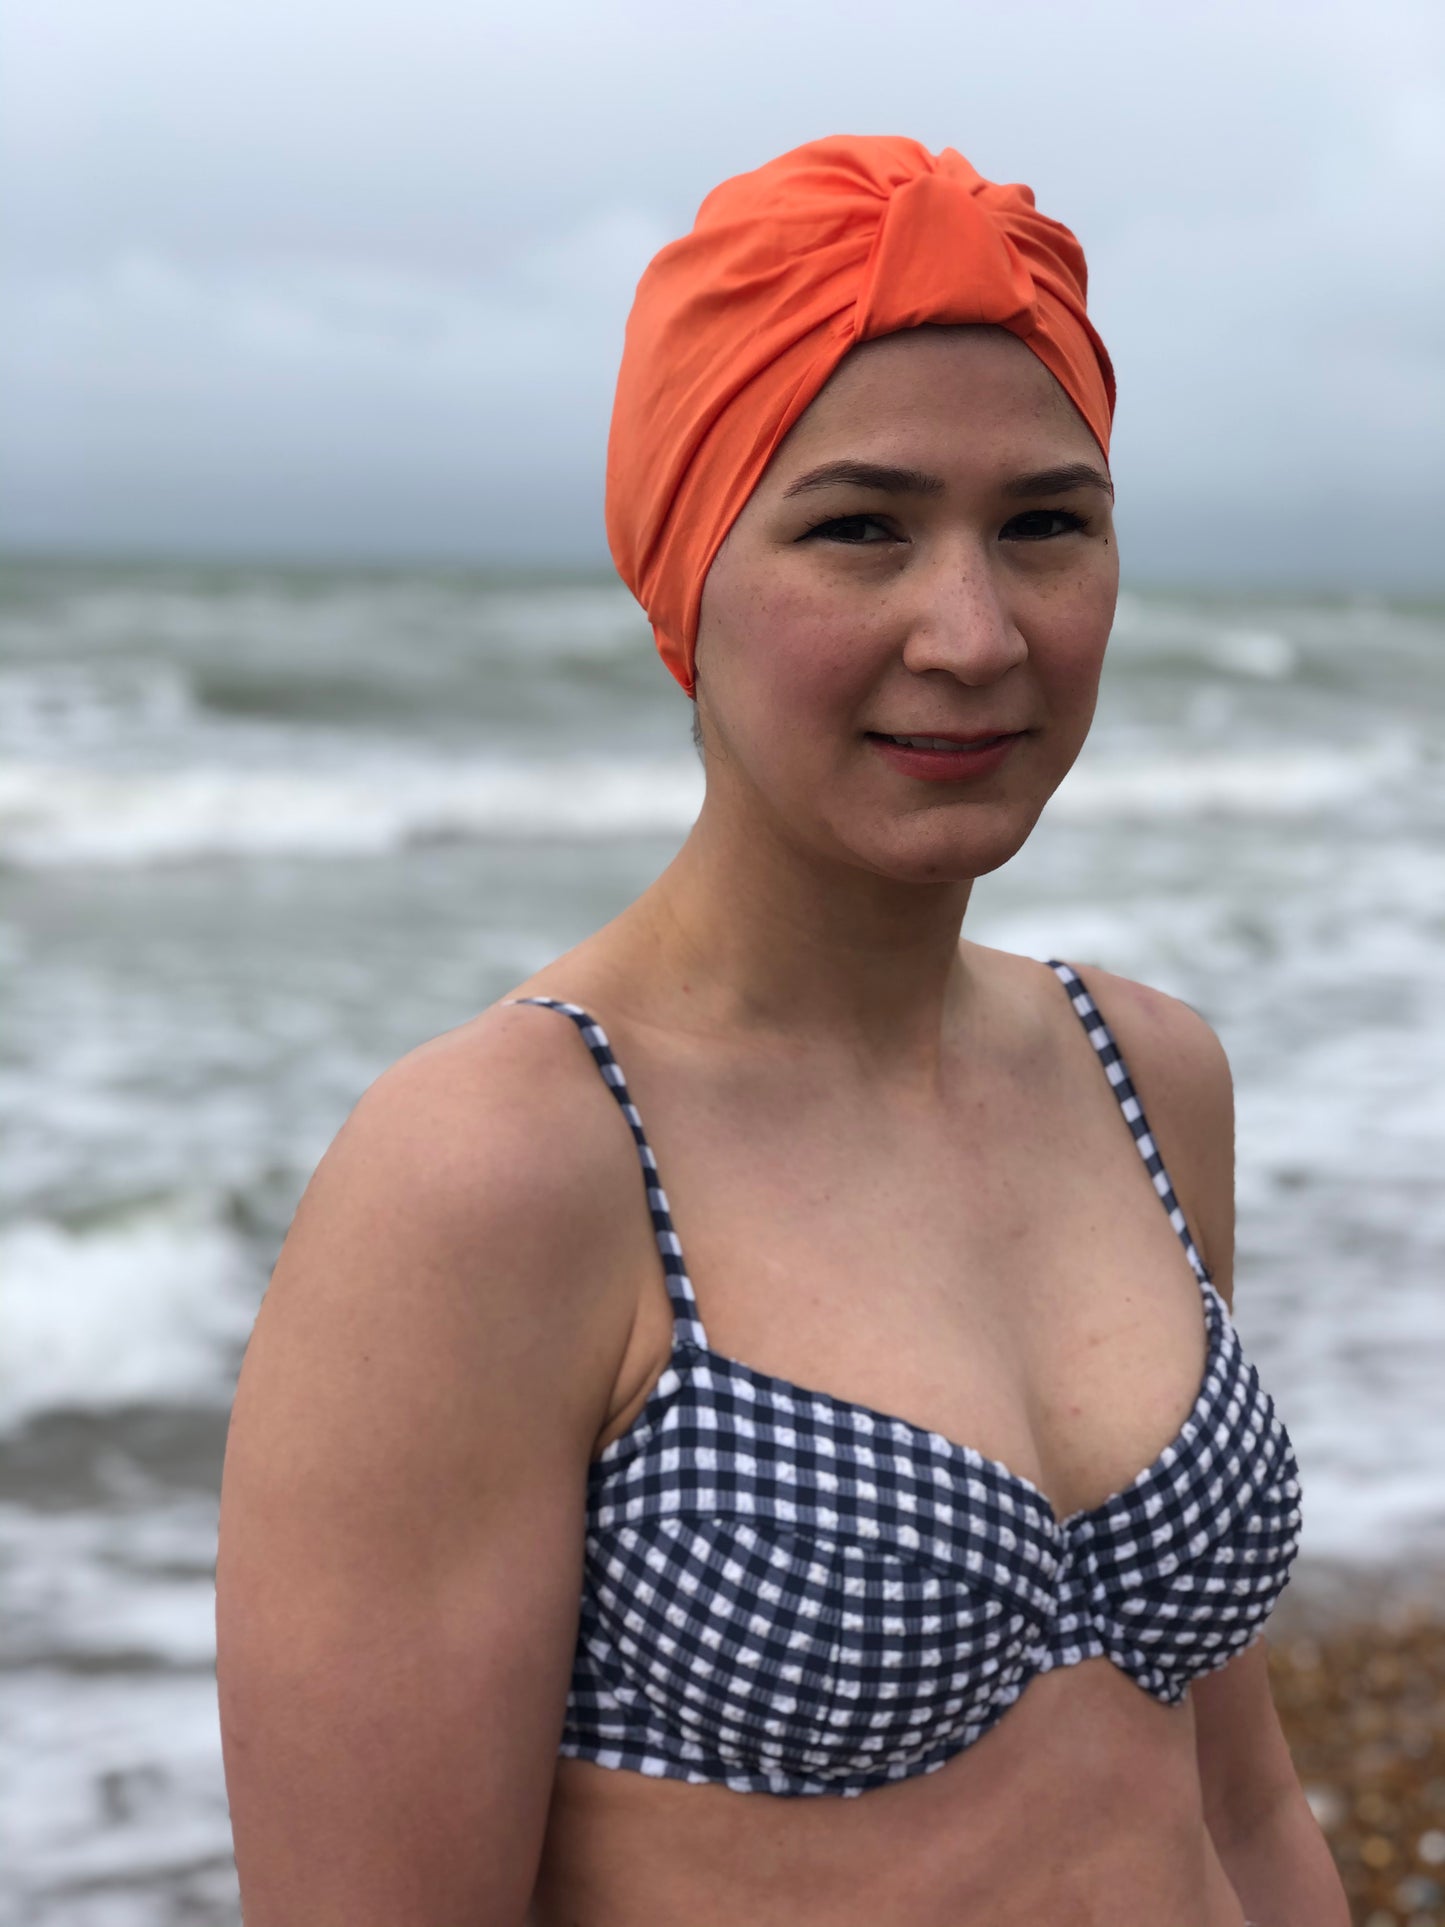 Salty Sea Knot - Swimming Cap Topper - Swim Turban - Tangerine Orange